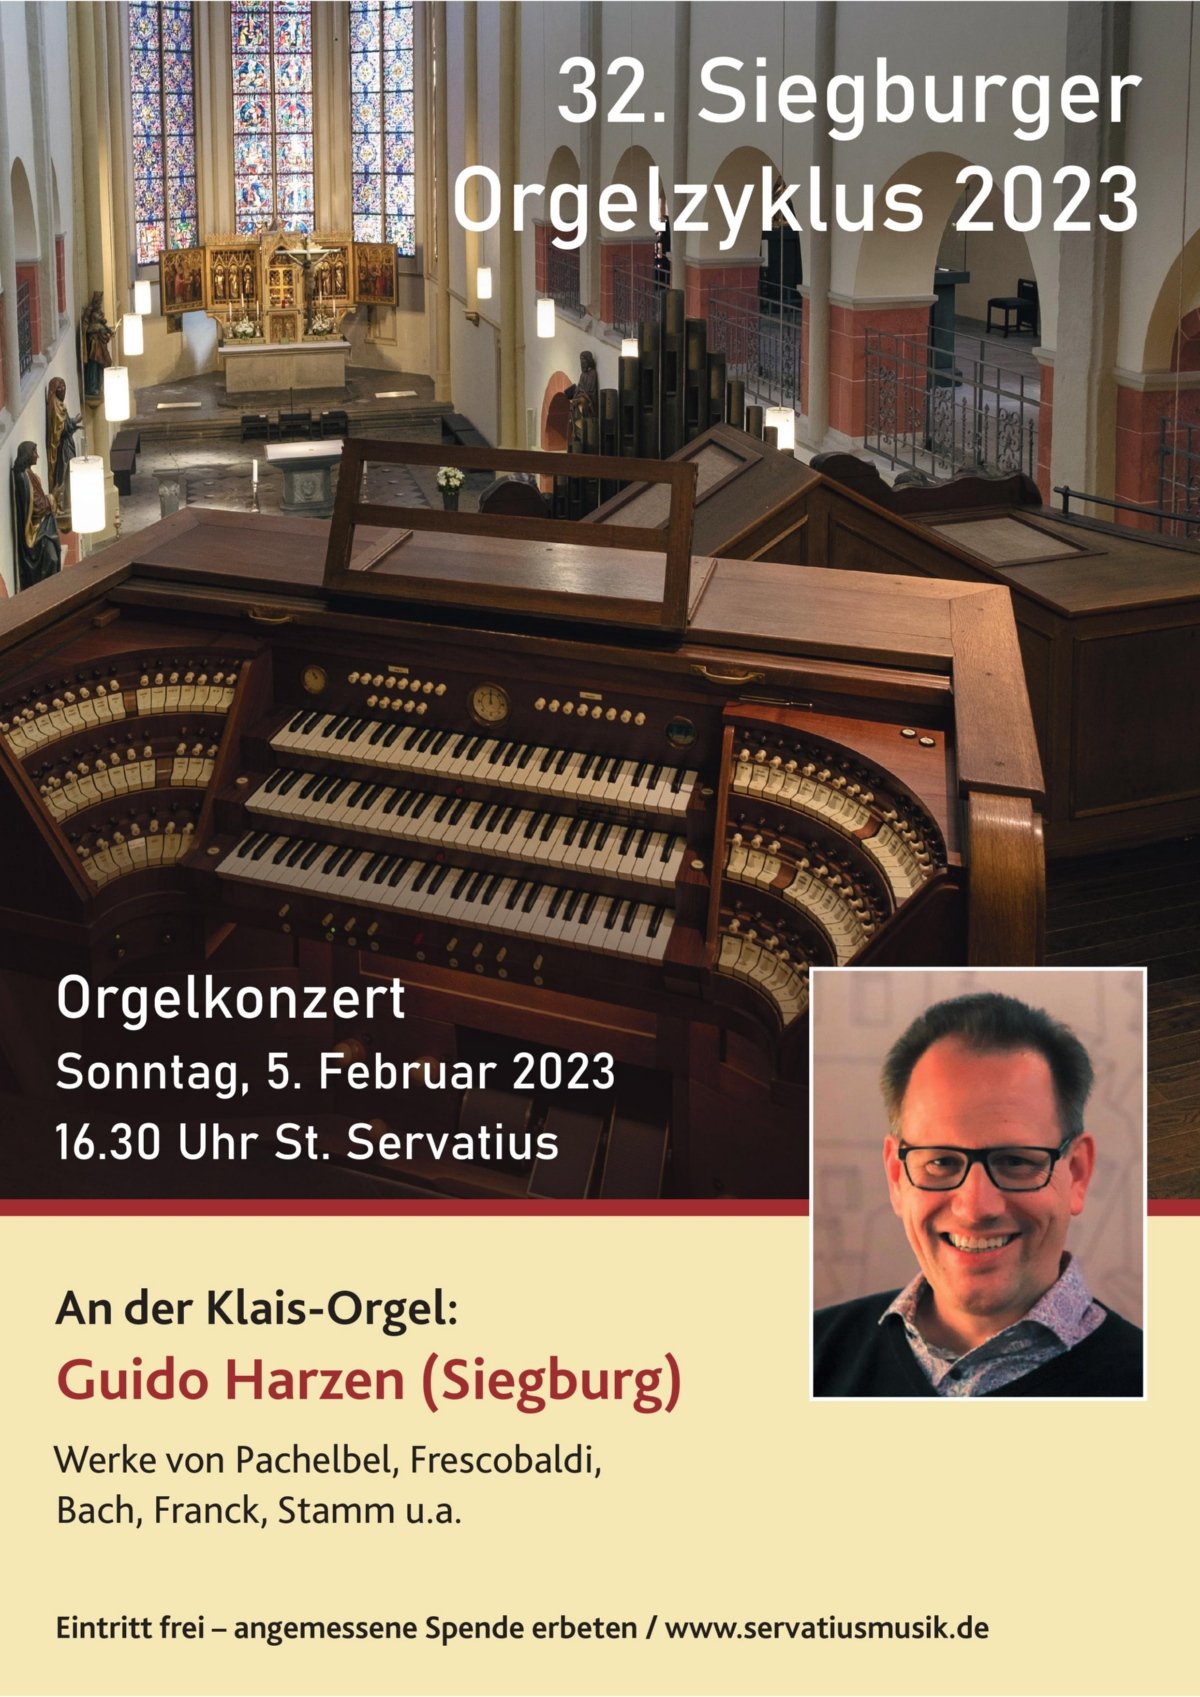 Orgelzyklus 2023 (c) Guido Harzen